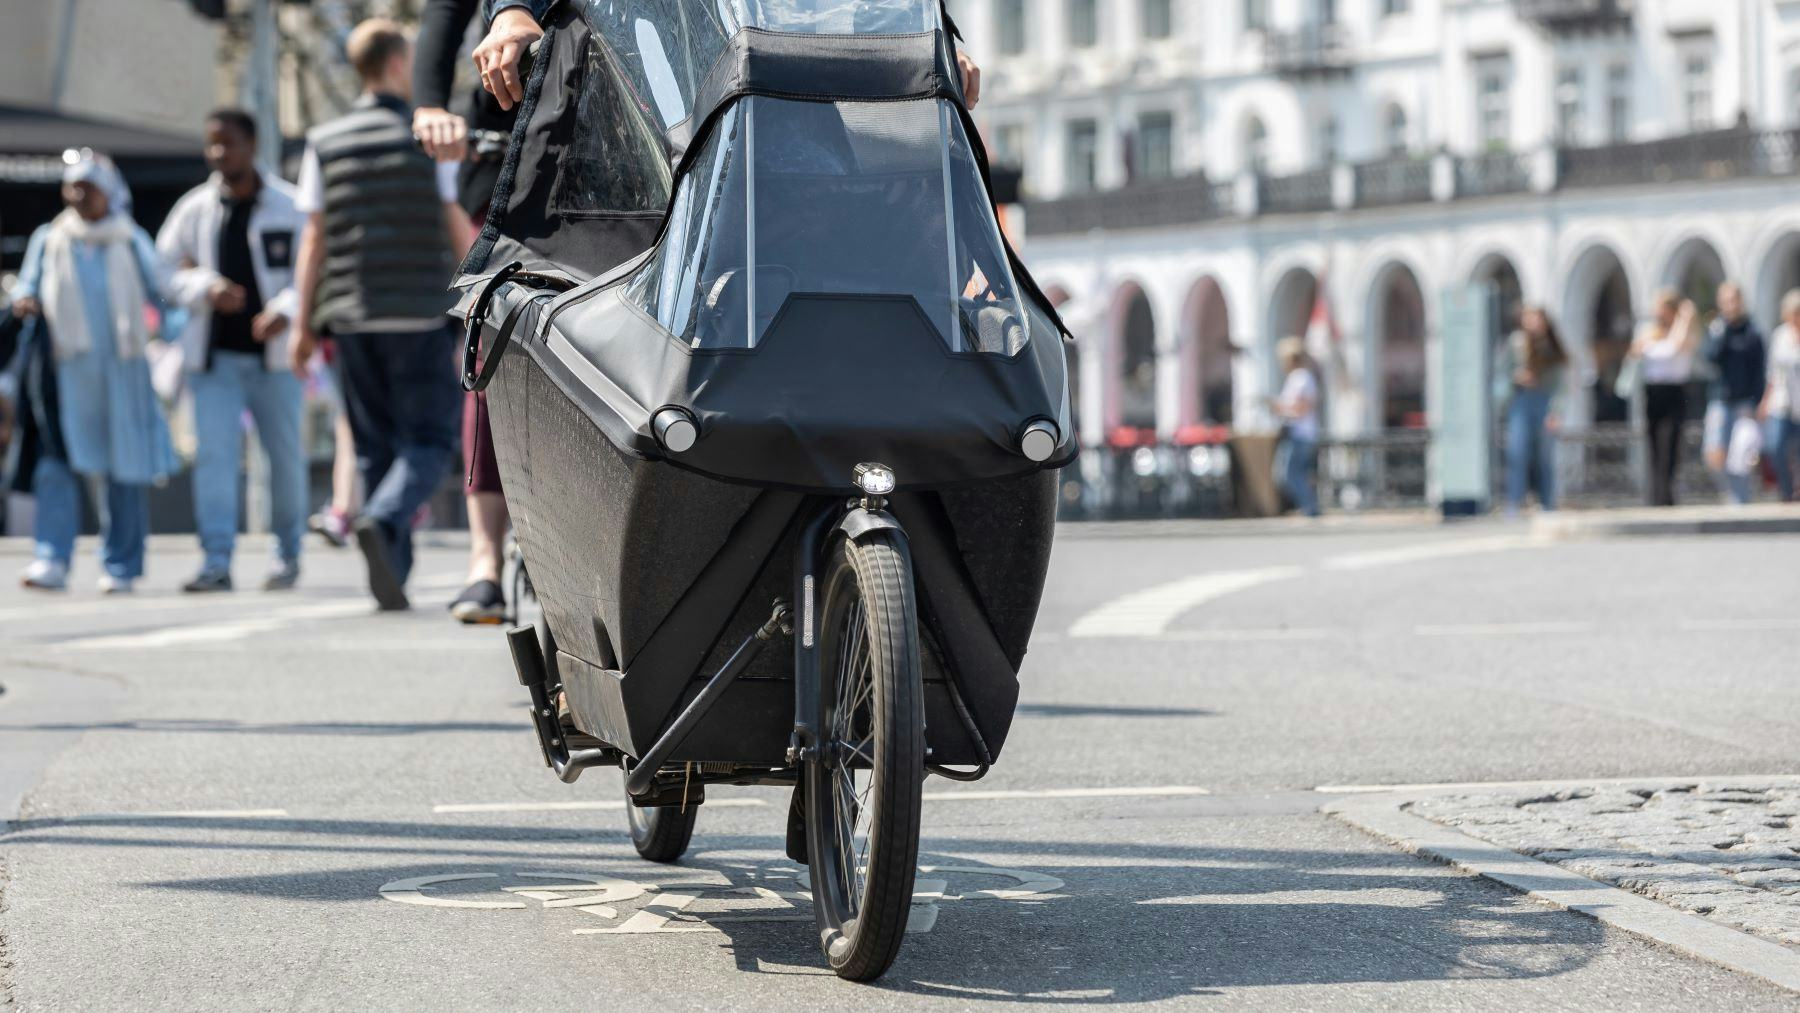 Eurobike explores transformation of cargo bike market from niche to mainstream